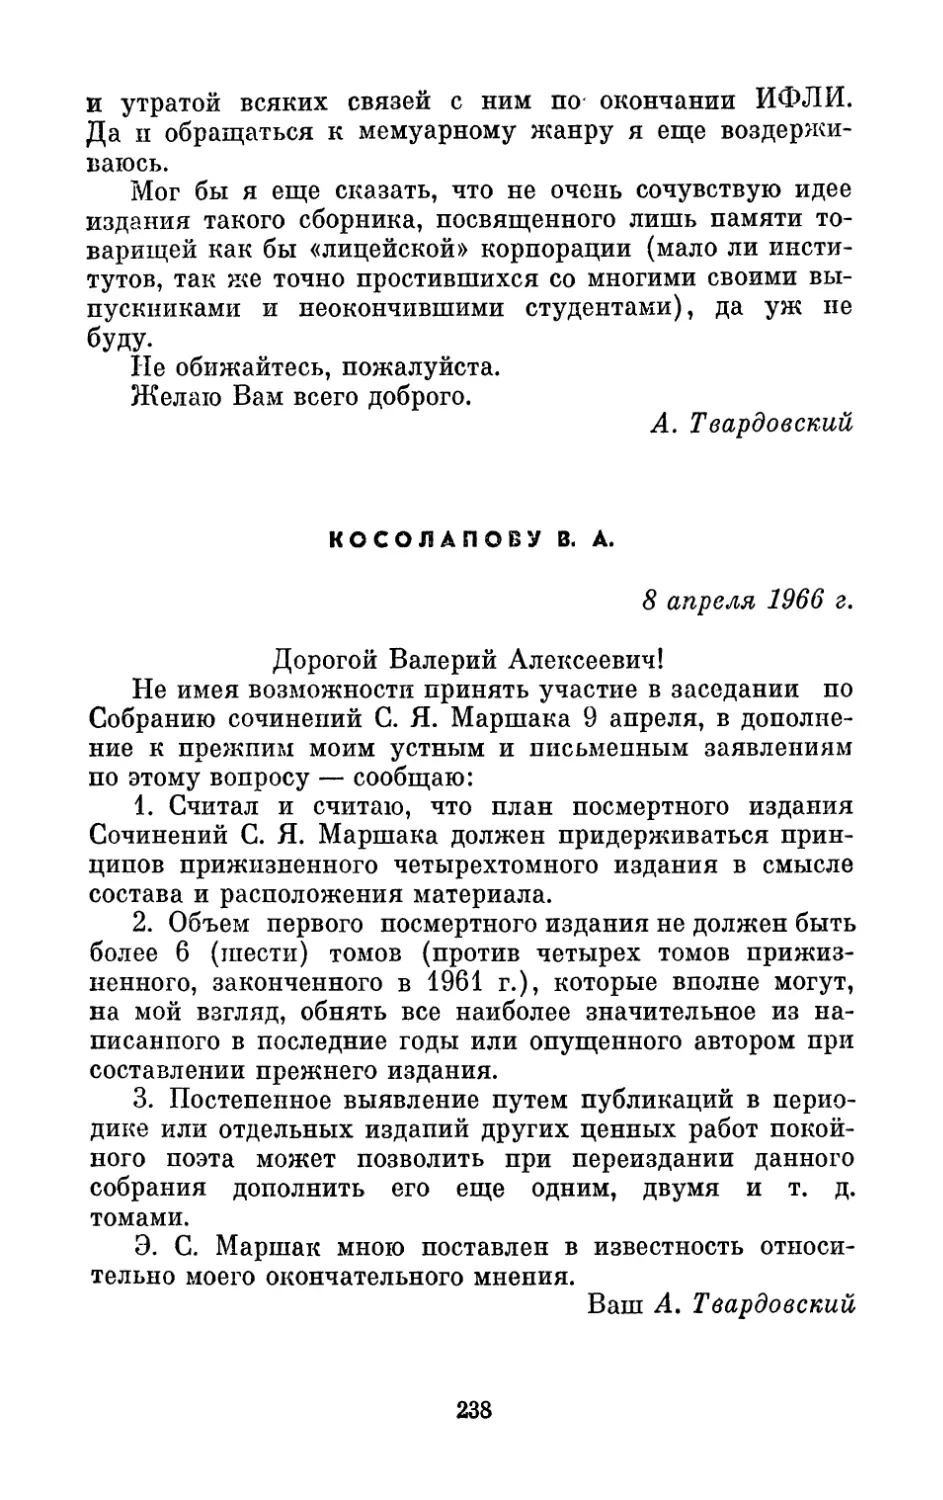 Косолапову В. А., 8 апреля 1966 г.